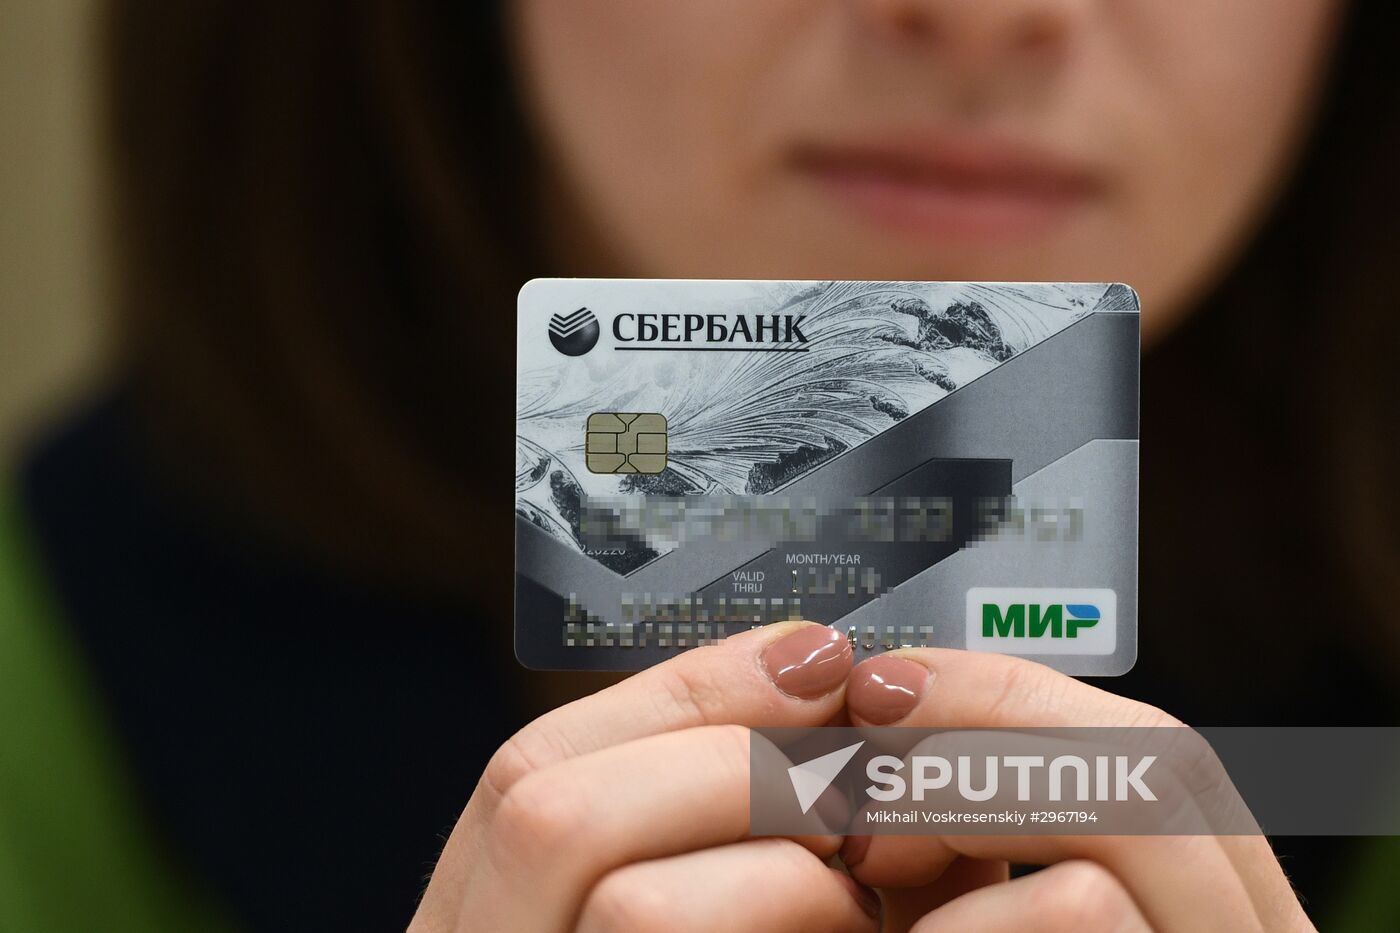 Presentation of Mir payment card